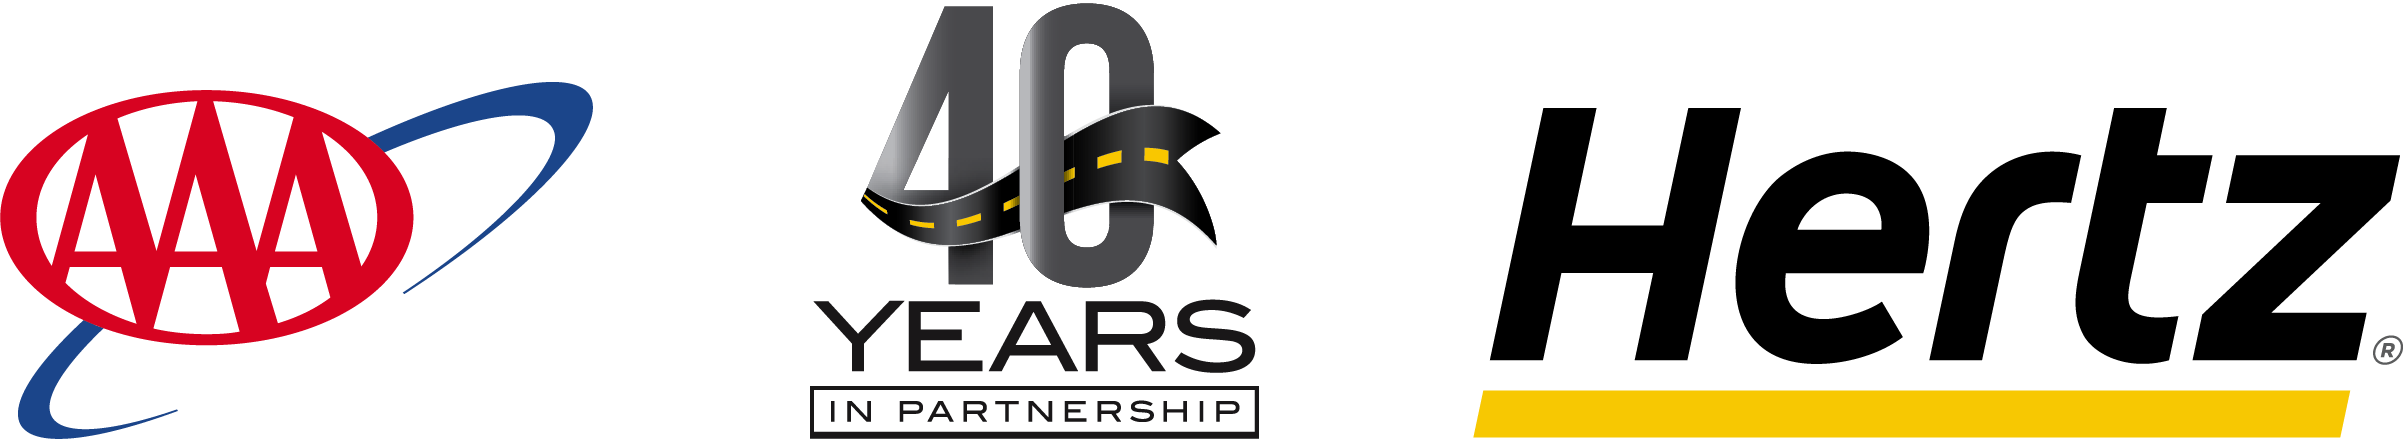 40th Year Partnership AAA and Hertz